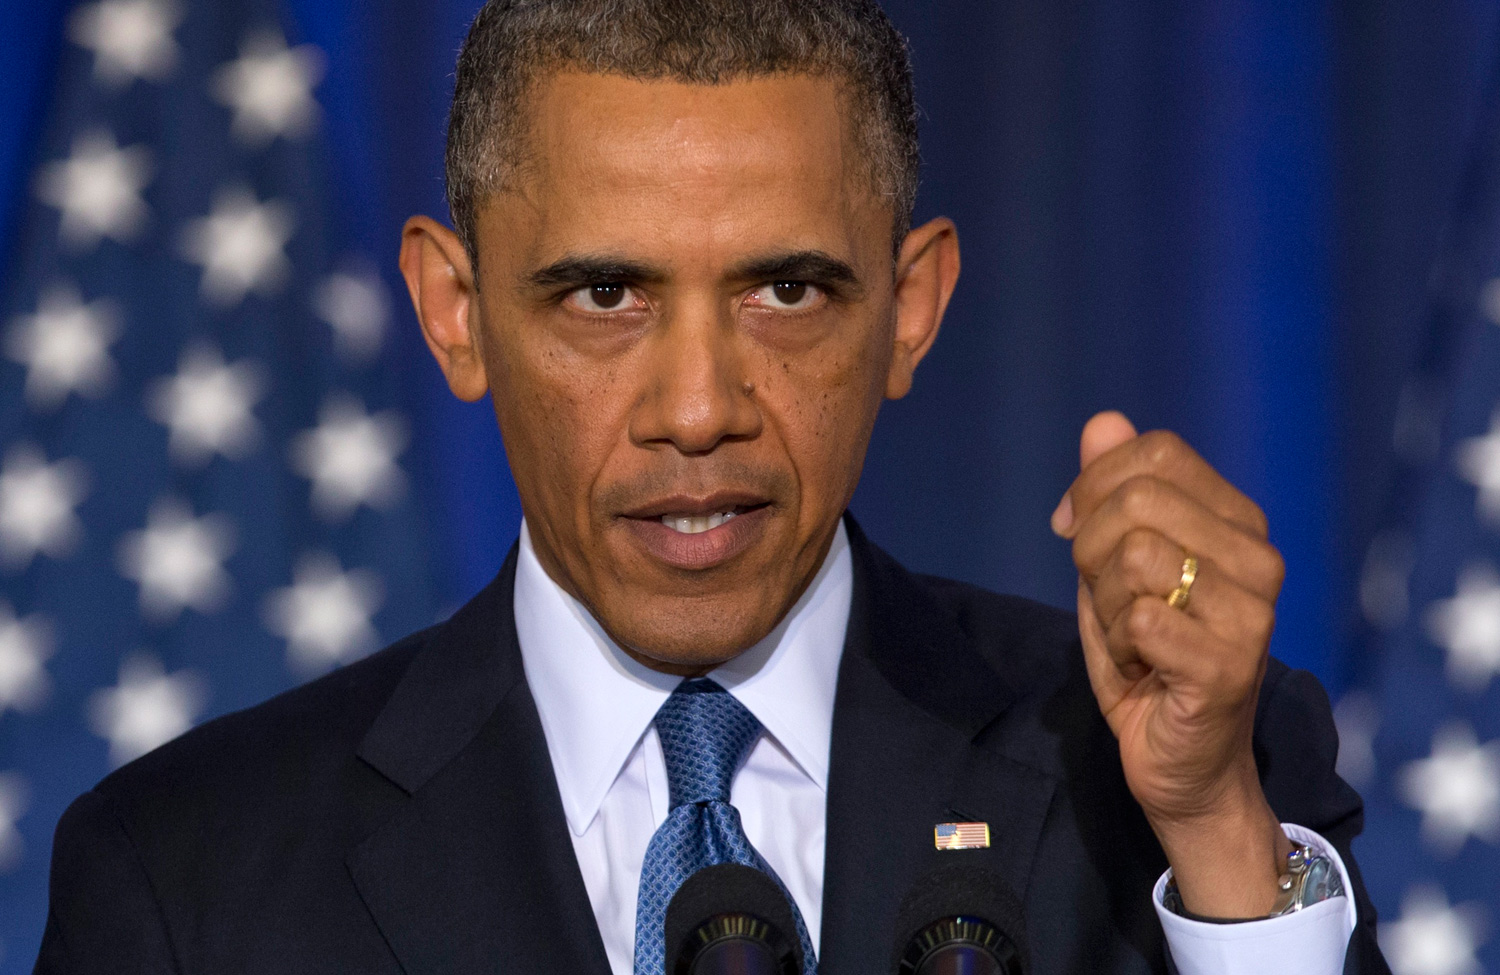 http://images.huffingtonpost.com/2014-10-12-obama.jpg